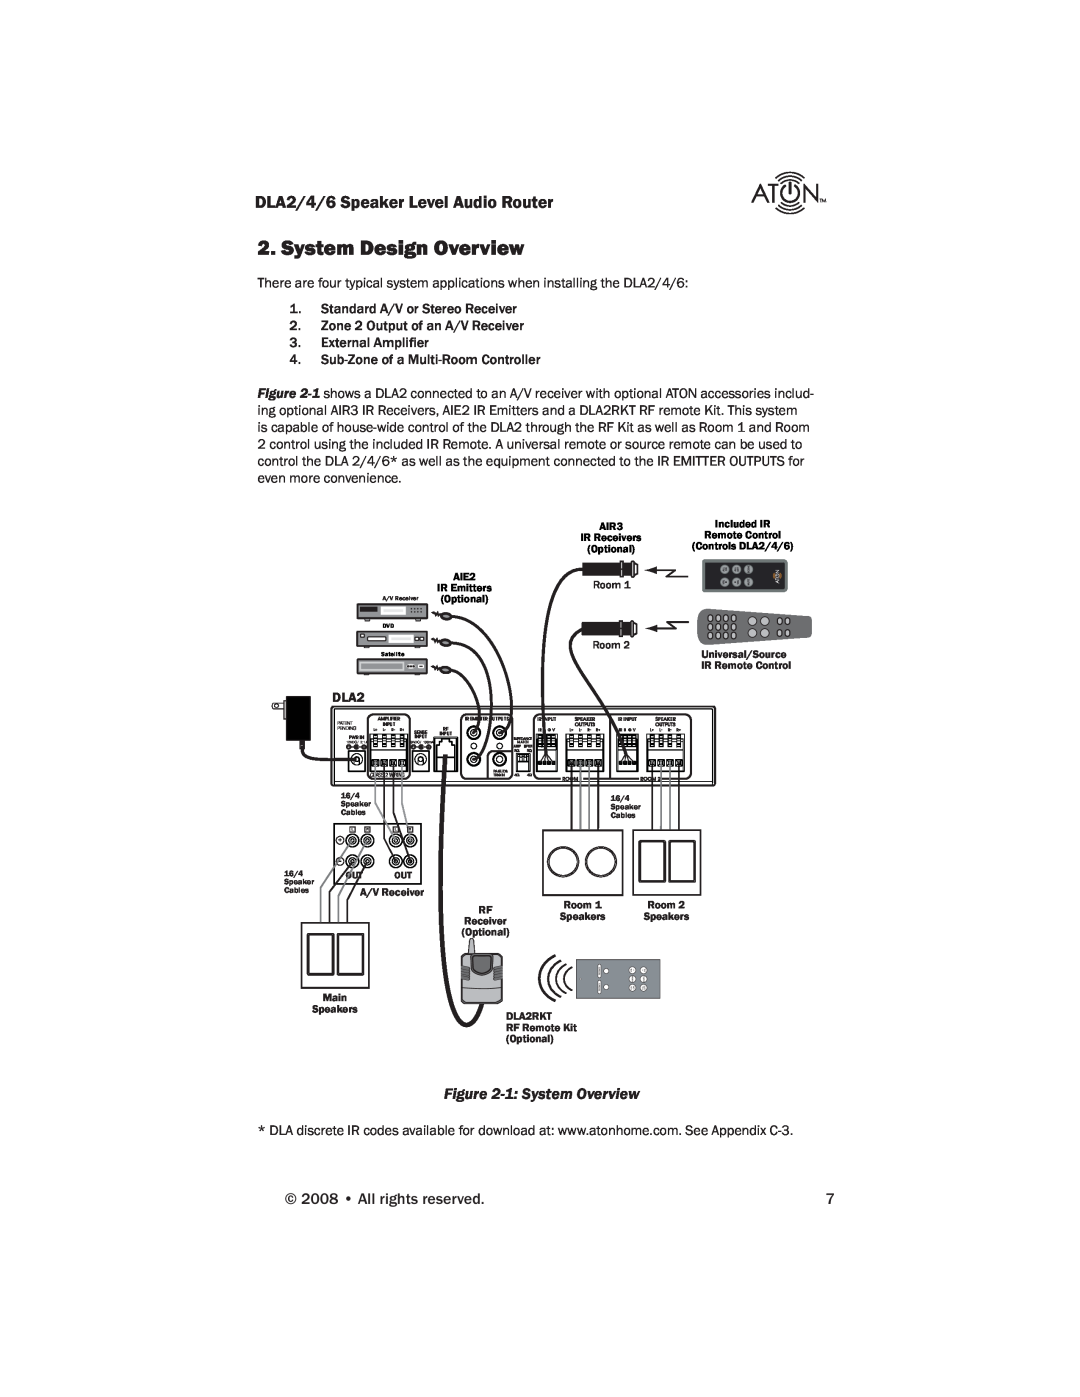 ATON DLA4, DLA2, DLA6 manual System Design Overview, 1 System Overview 